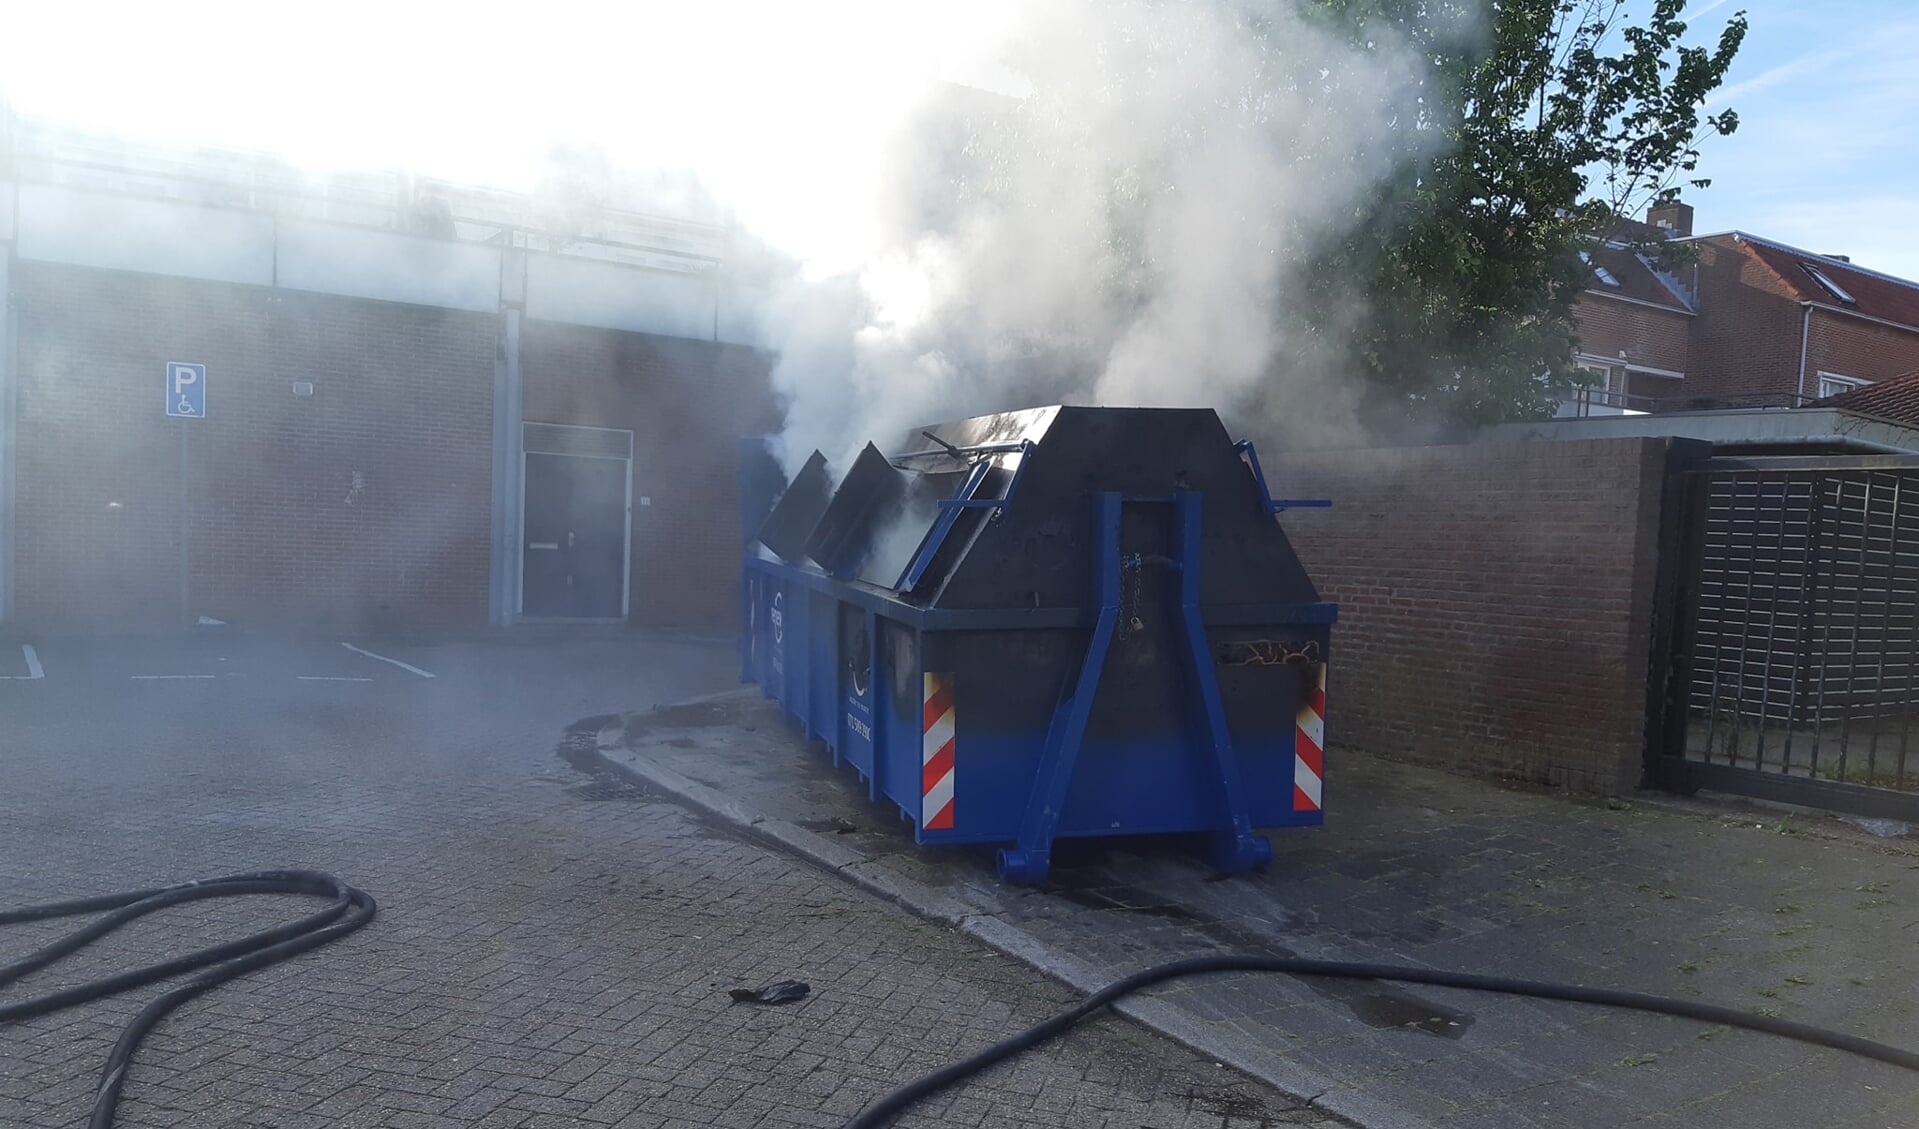 Foto: Brandweer Rijnsburg